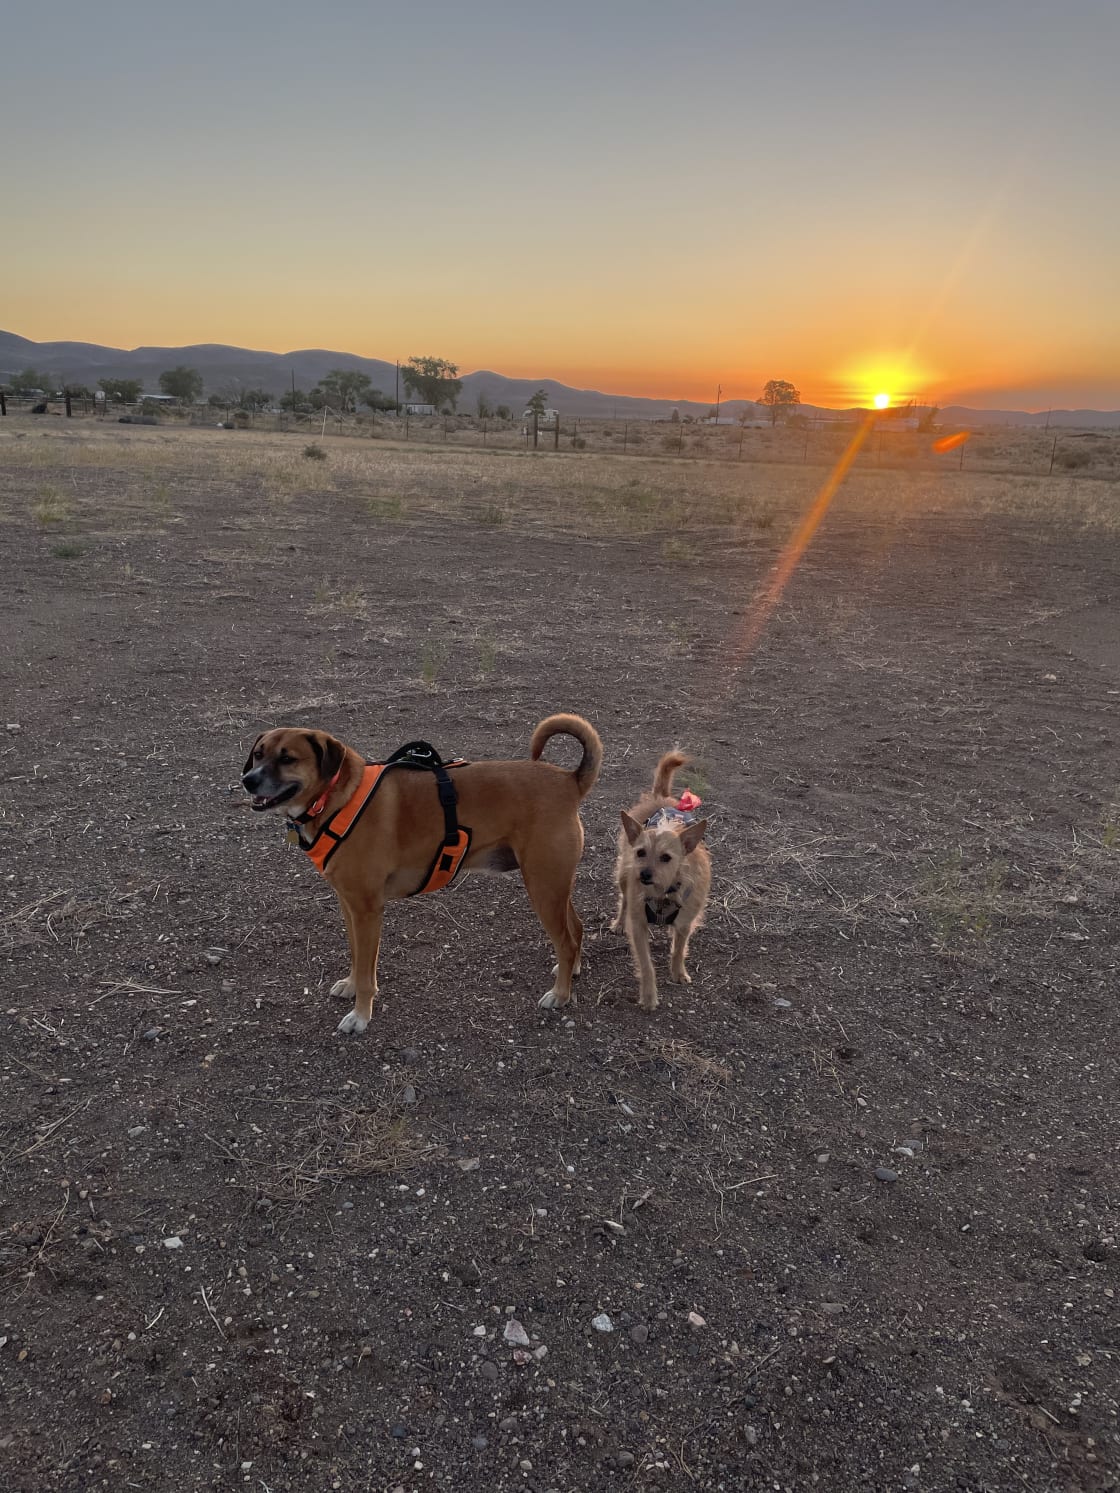 Bandit and Fred enjoy beautiful sunrises too!